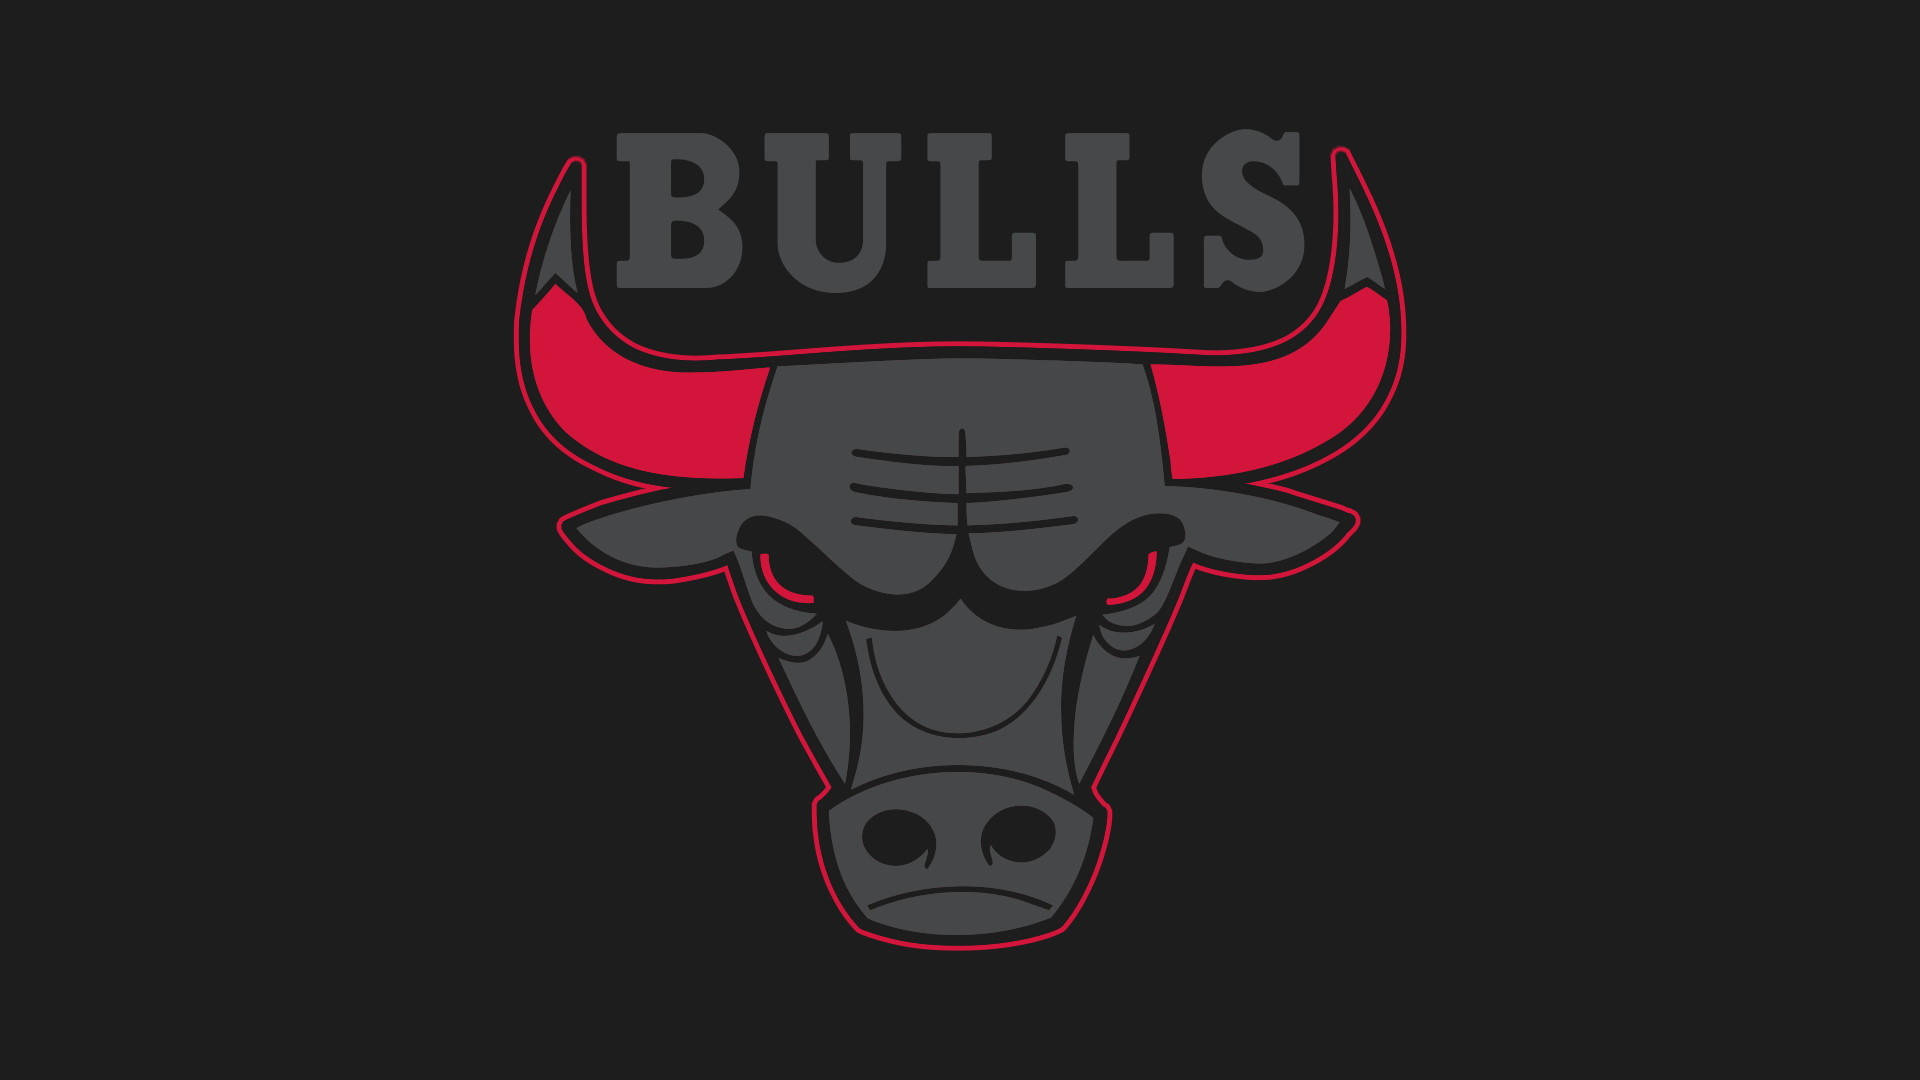 Chicago Bulls Black Hd Desktop Wallpaper